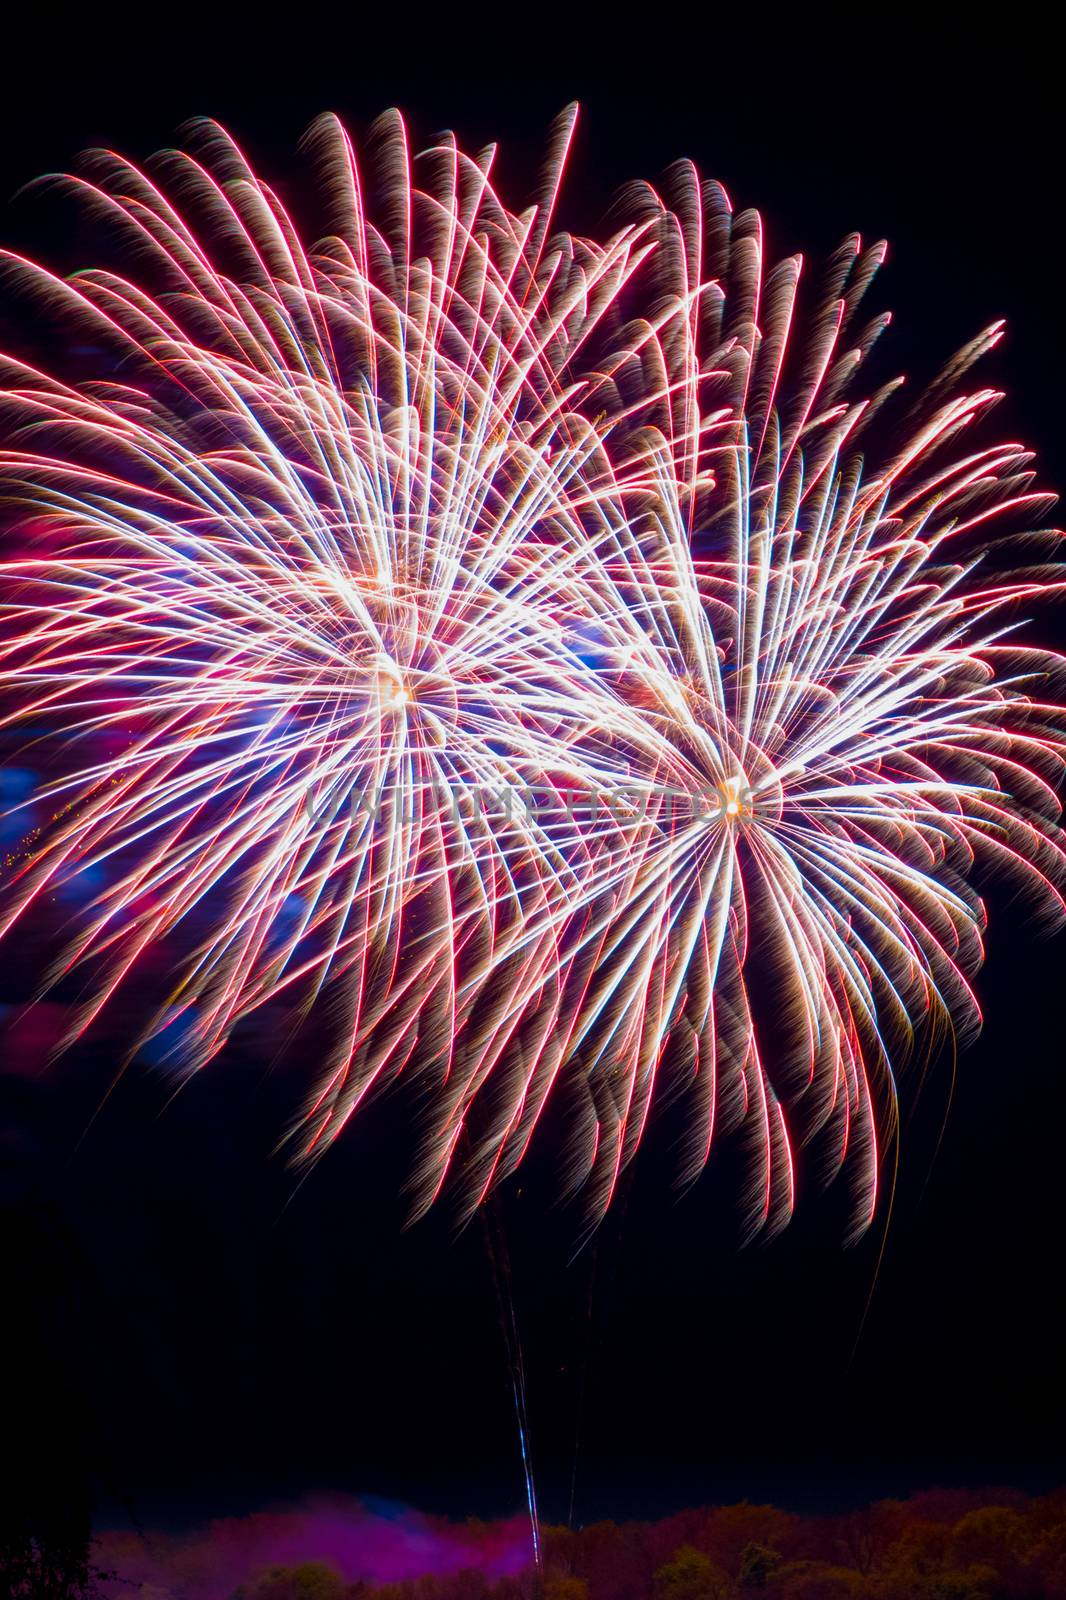 Firework fireworks celebration red blue white tails